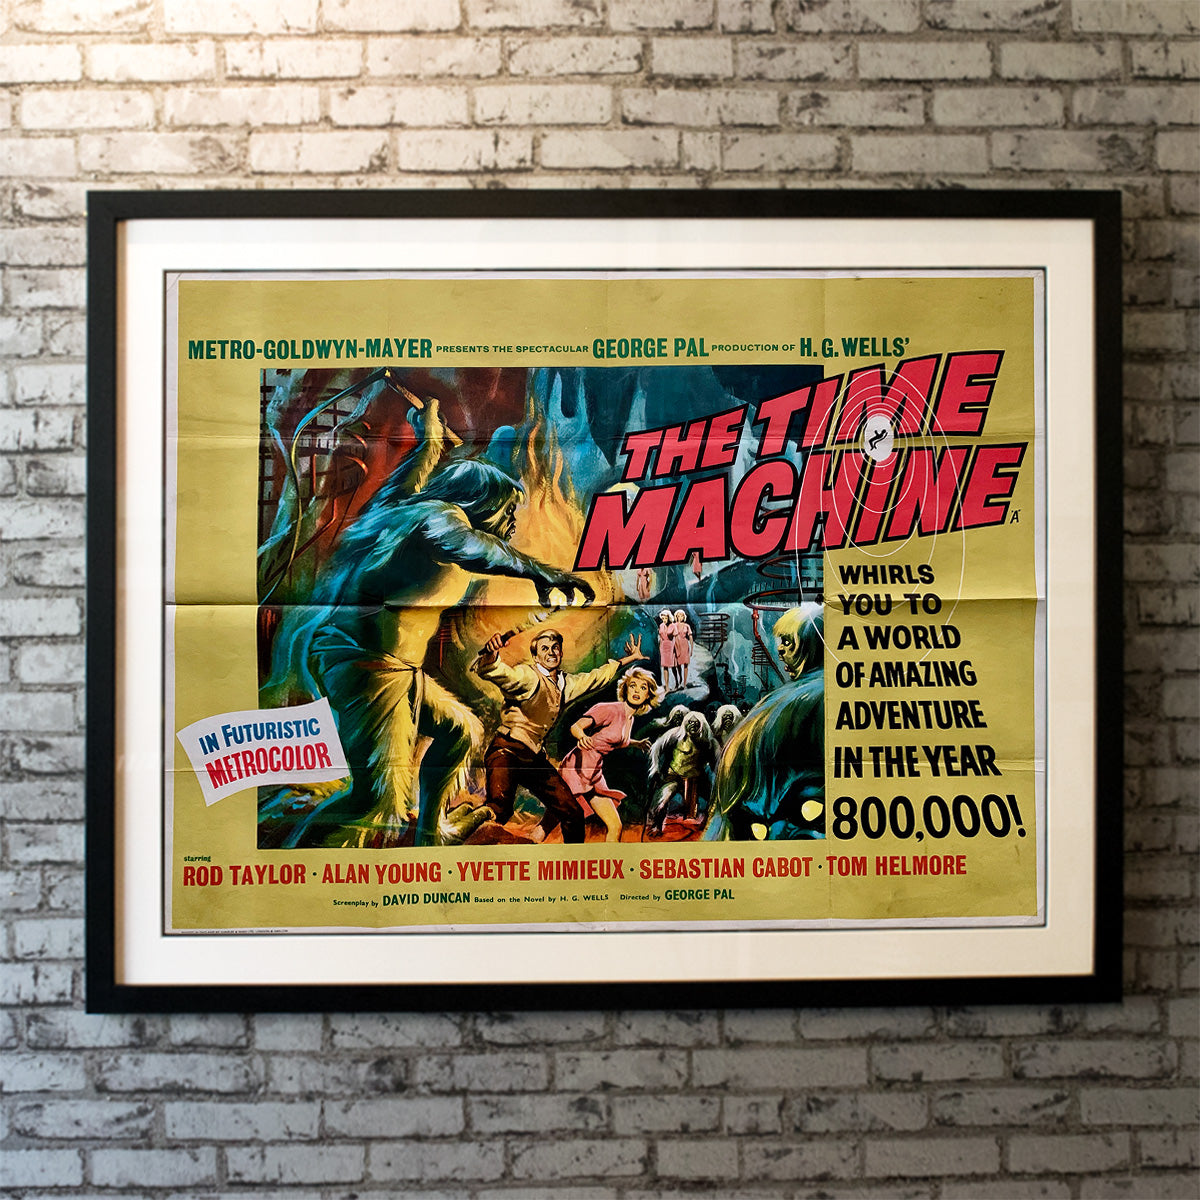 Time Machine, The (1960)